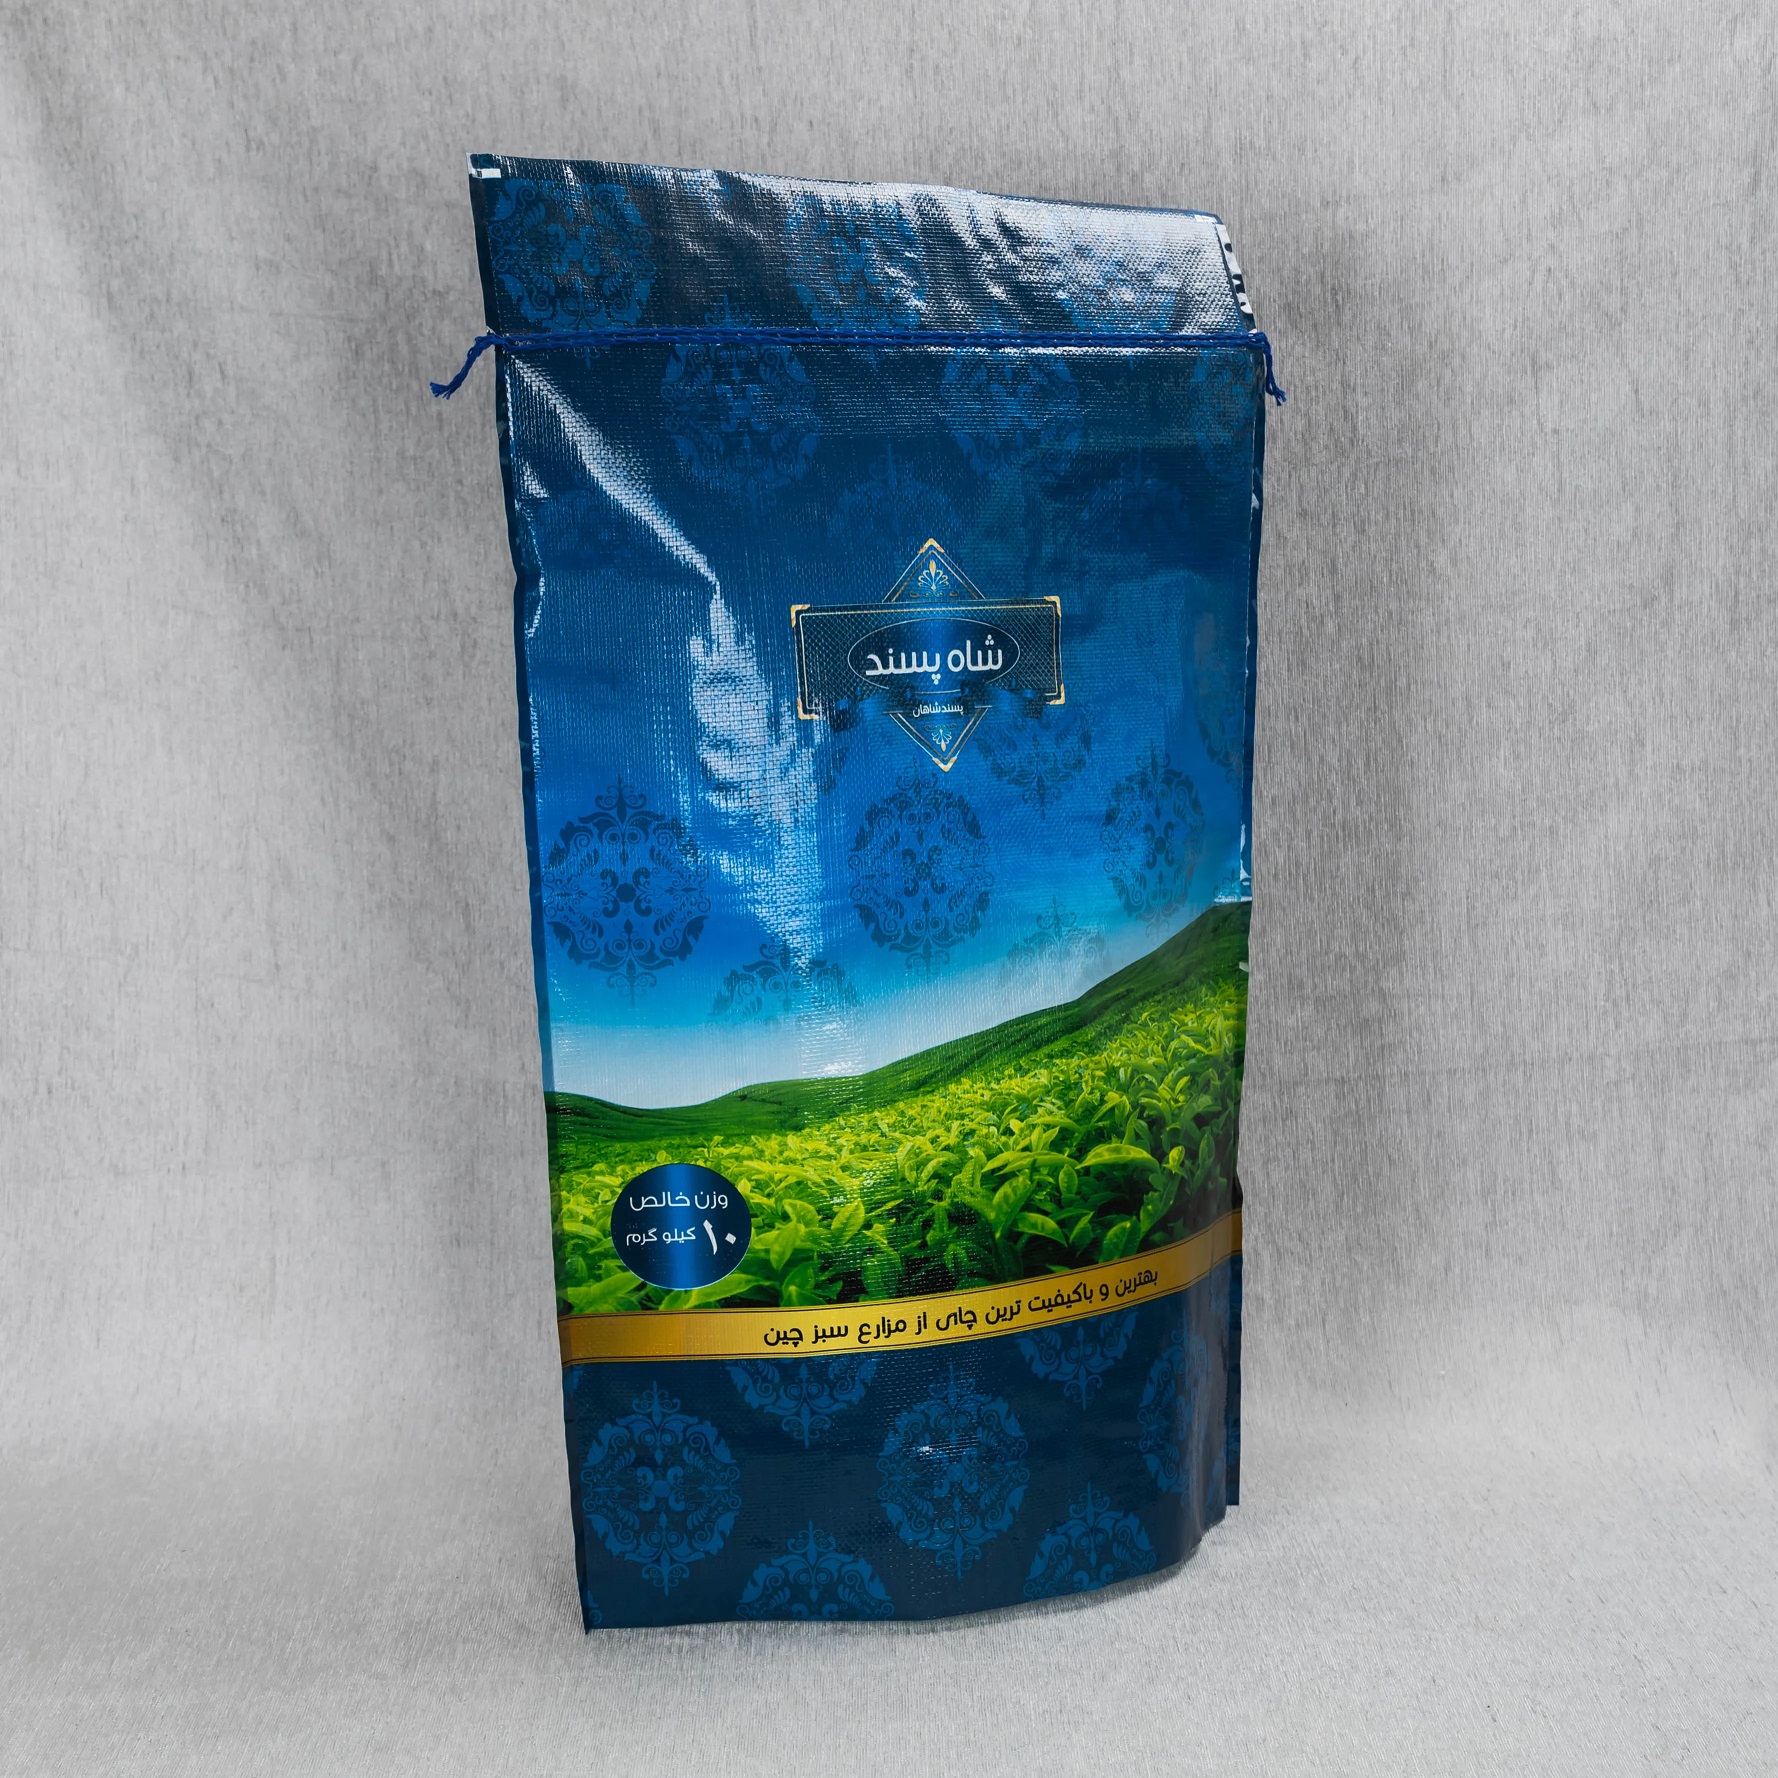 Block Bottom BOPP Bags Full-Color Printed Polypropylene Packaging Bags for Seed 25kg 50kg